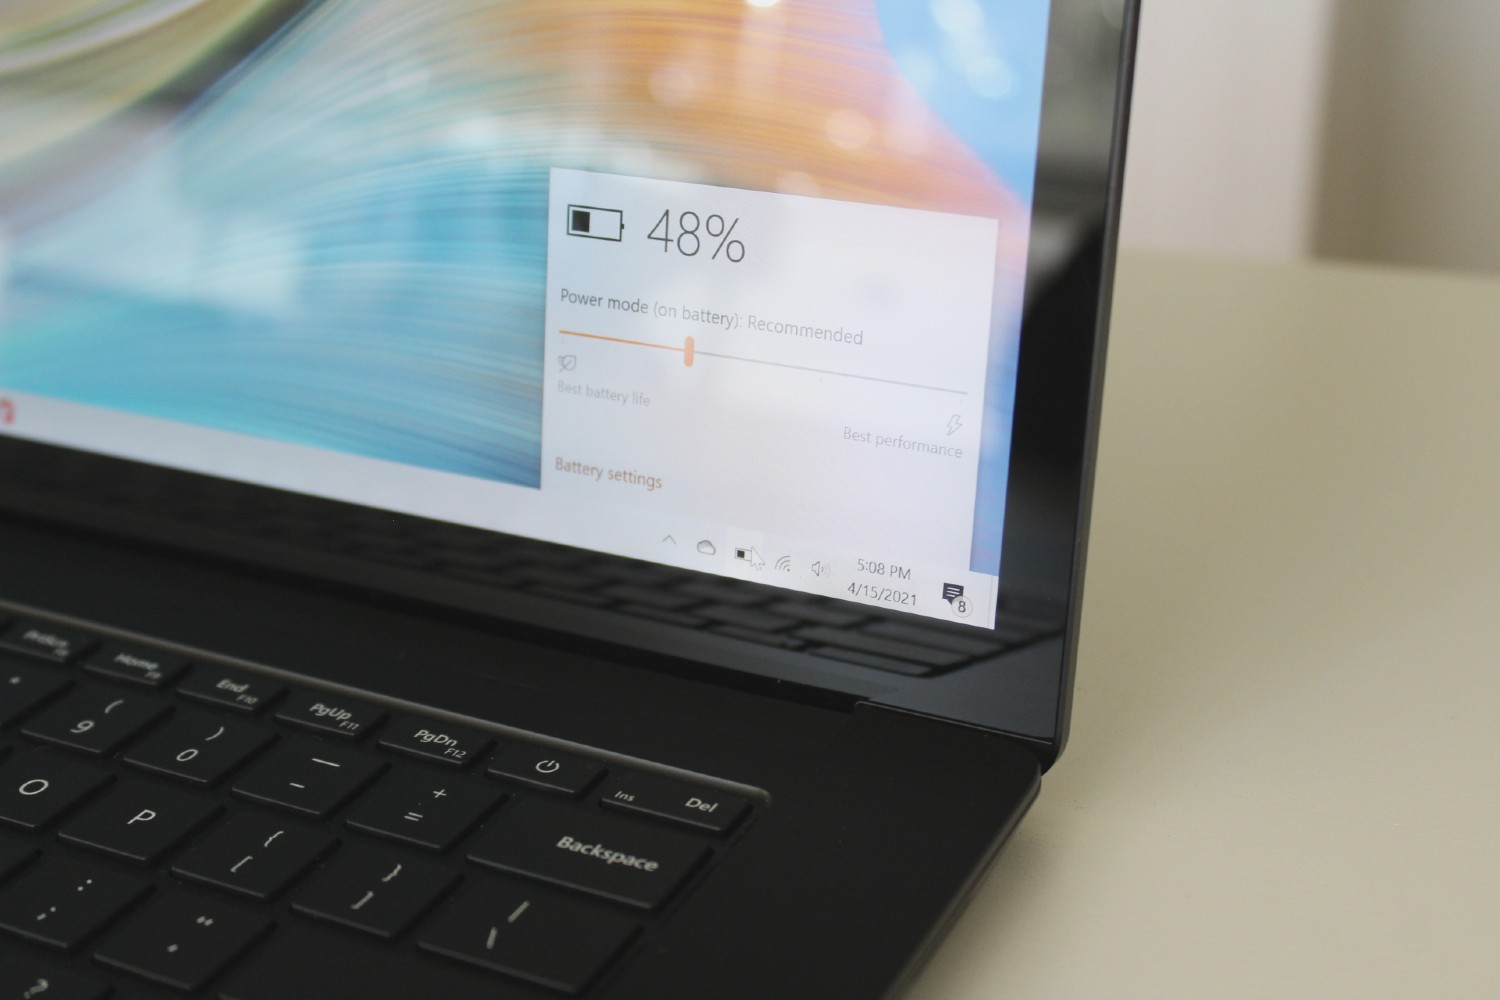 New Surface Laptop 4: Ultra-Thin Touchscreen Laptop - Microsoft